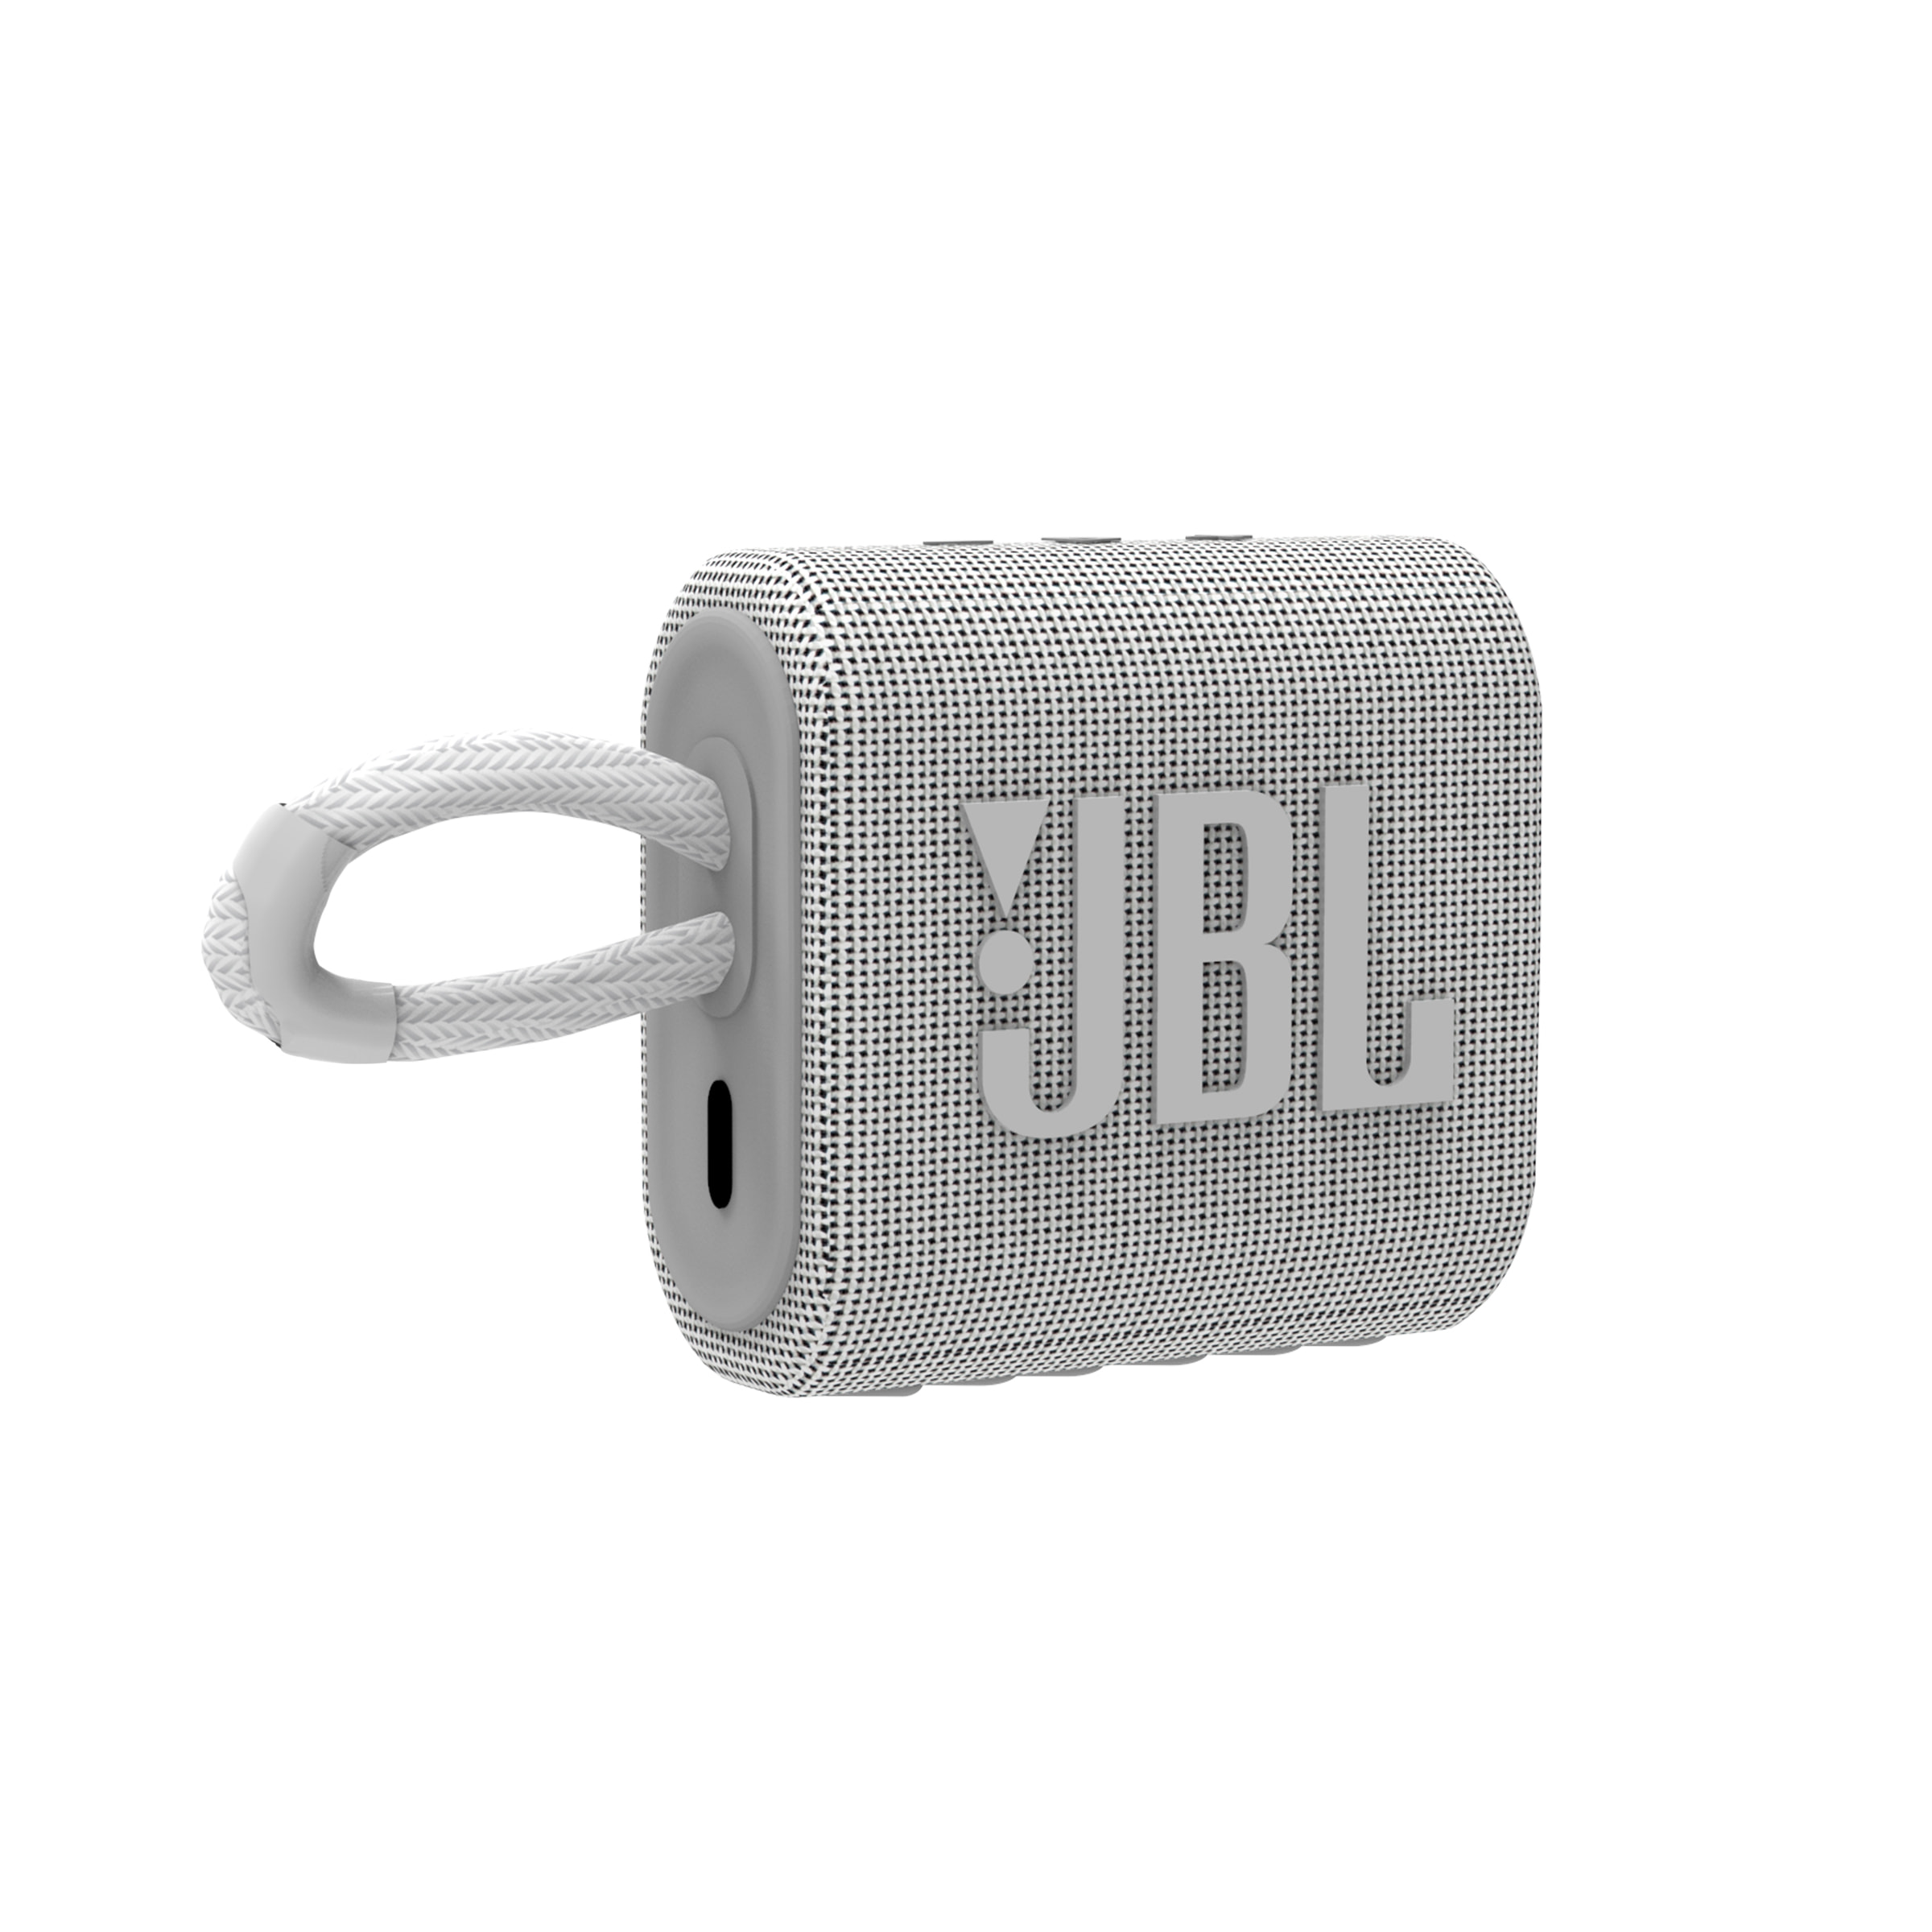 Nombre del fichero: JBL-GO3-White-1.jpg
Dimensiones: 2400 x 2400 píxeles
Tamaño del fichero: 401.08 KB